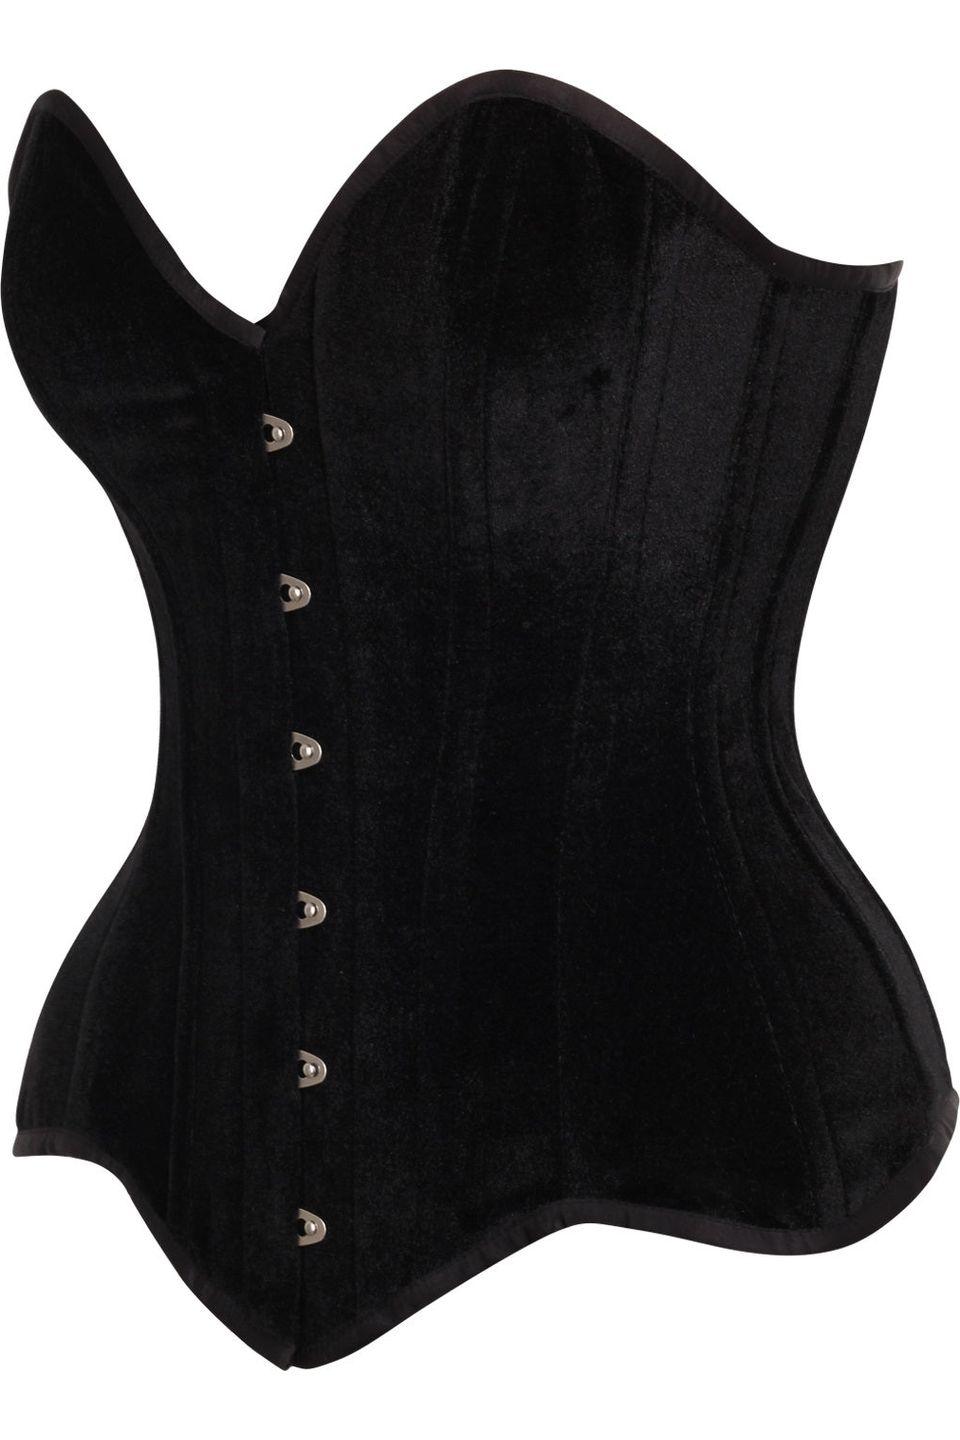 Top Drawer Black Velvet Steel Boned Overbust Corset - AMIClubwear